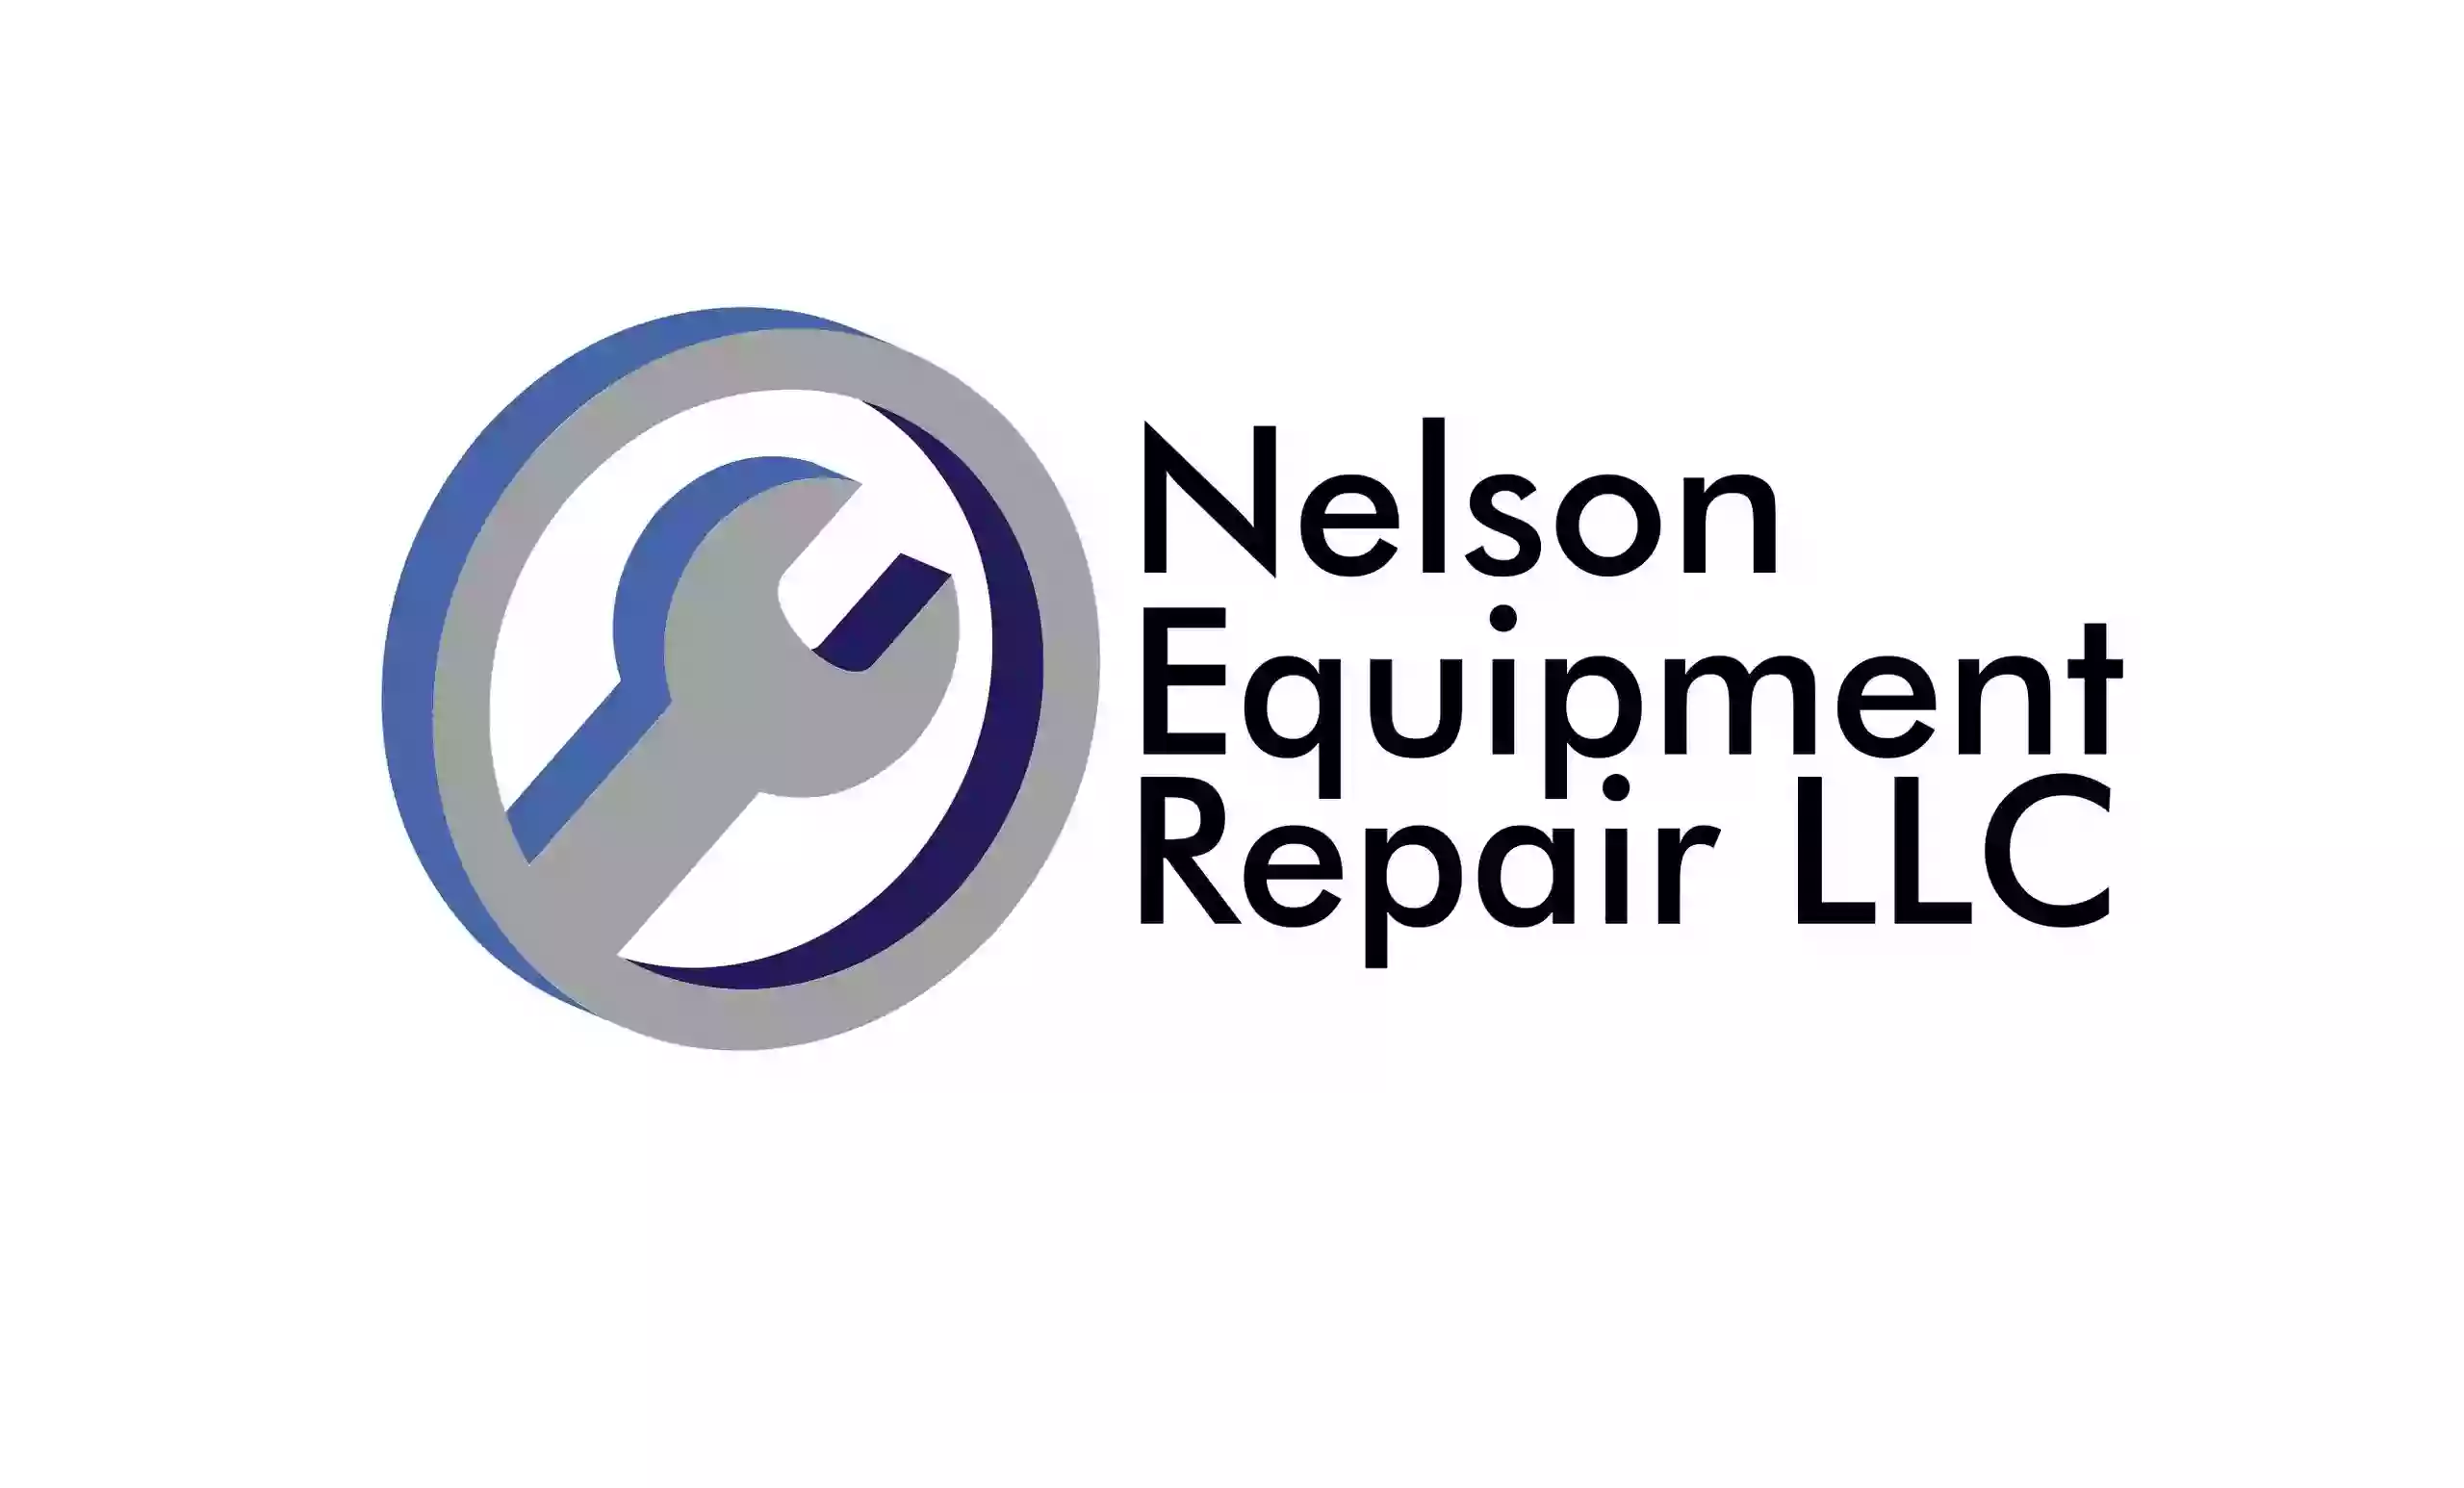 Nelson Equipment Repair LLC